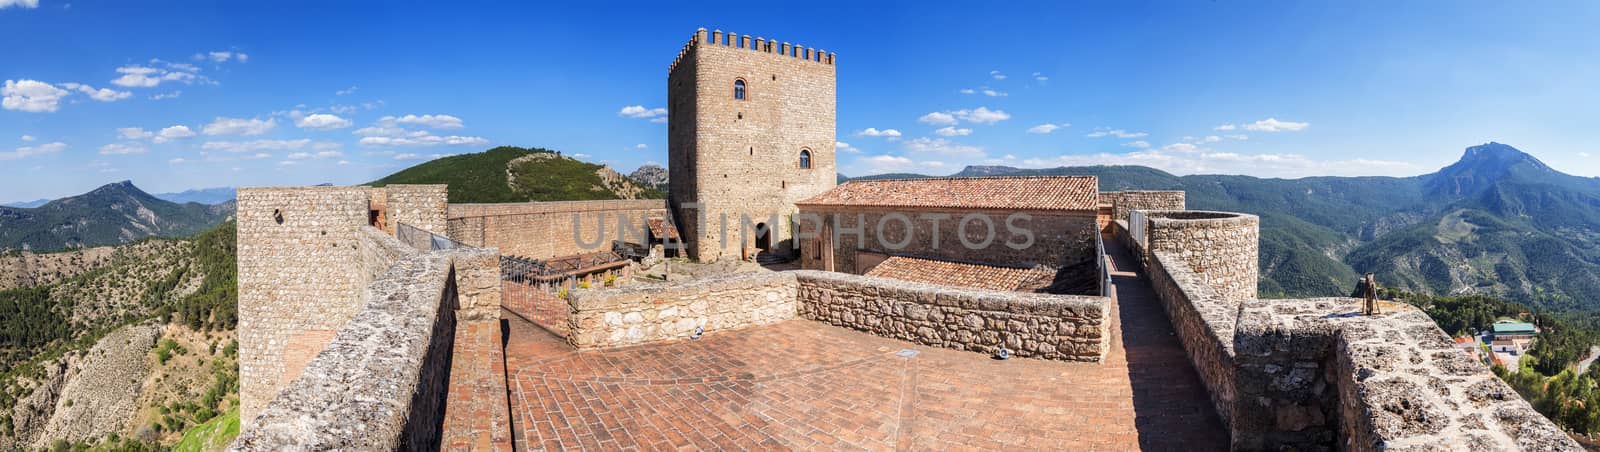 Segura de la Sierra castle, Cazorla and Segura sierra, Jaen, Spa by max8xam